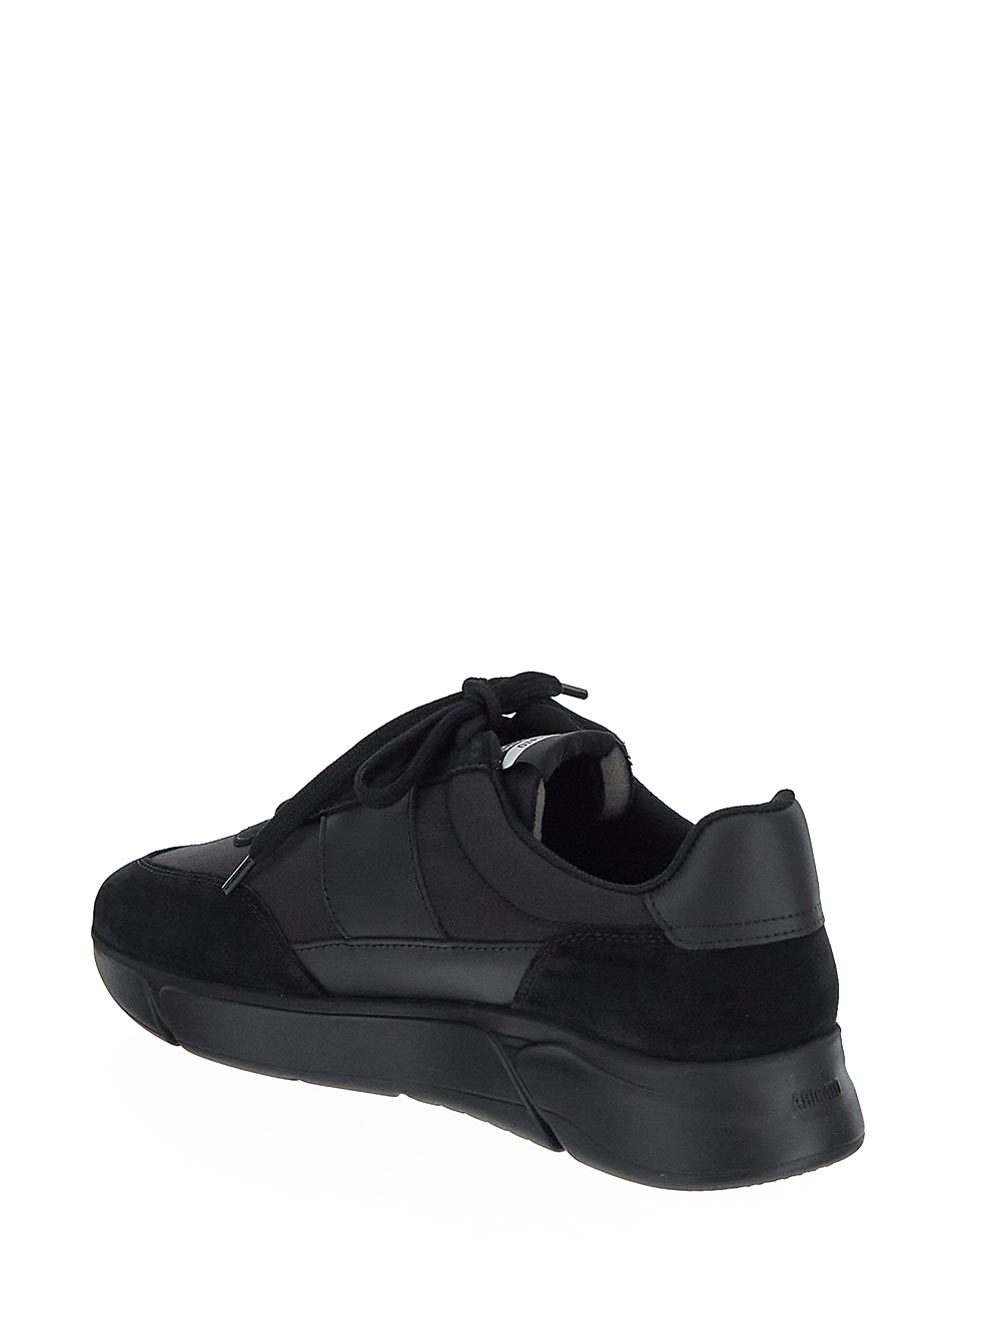 AXEL ARIGATO AXEL ARIGATO Sneaker black F0084079BLACK